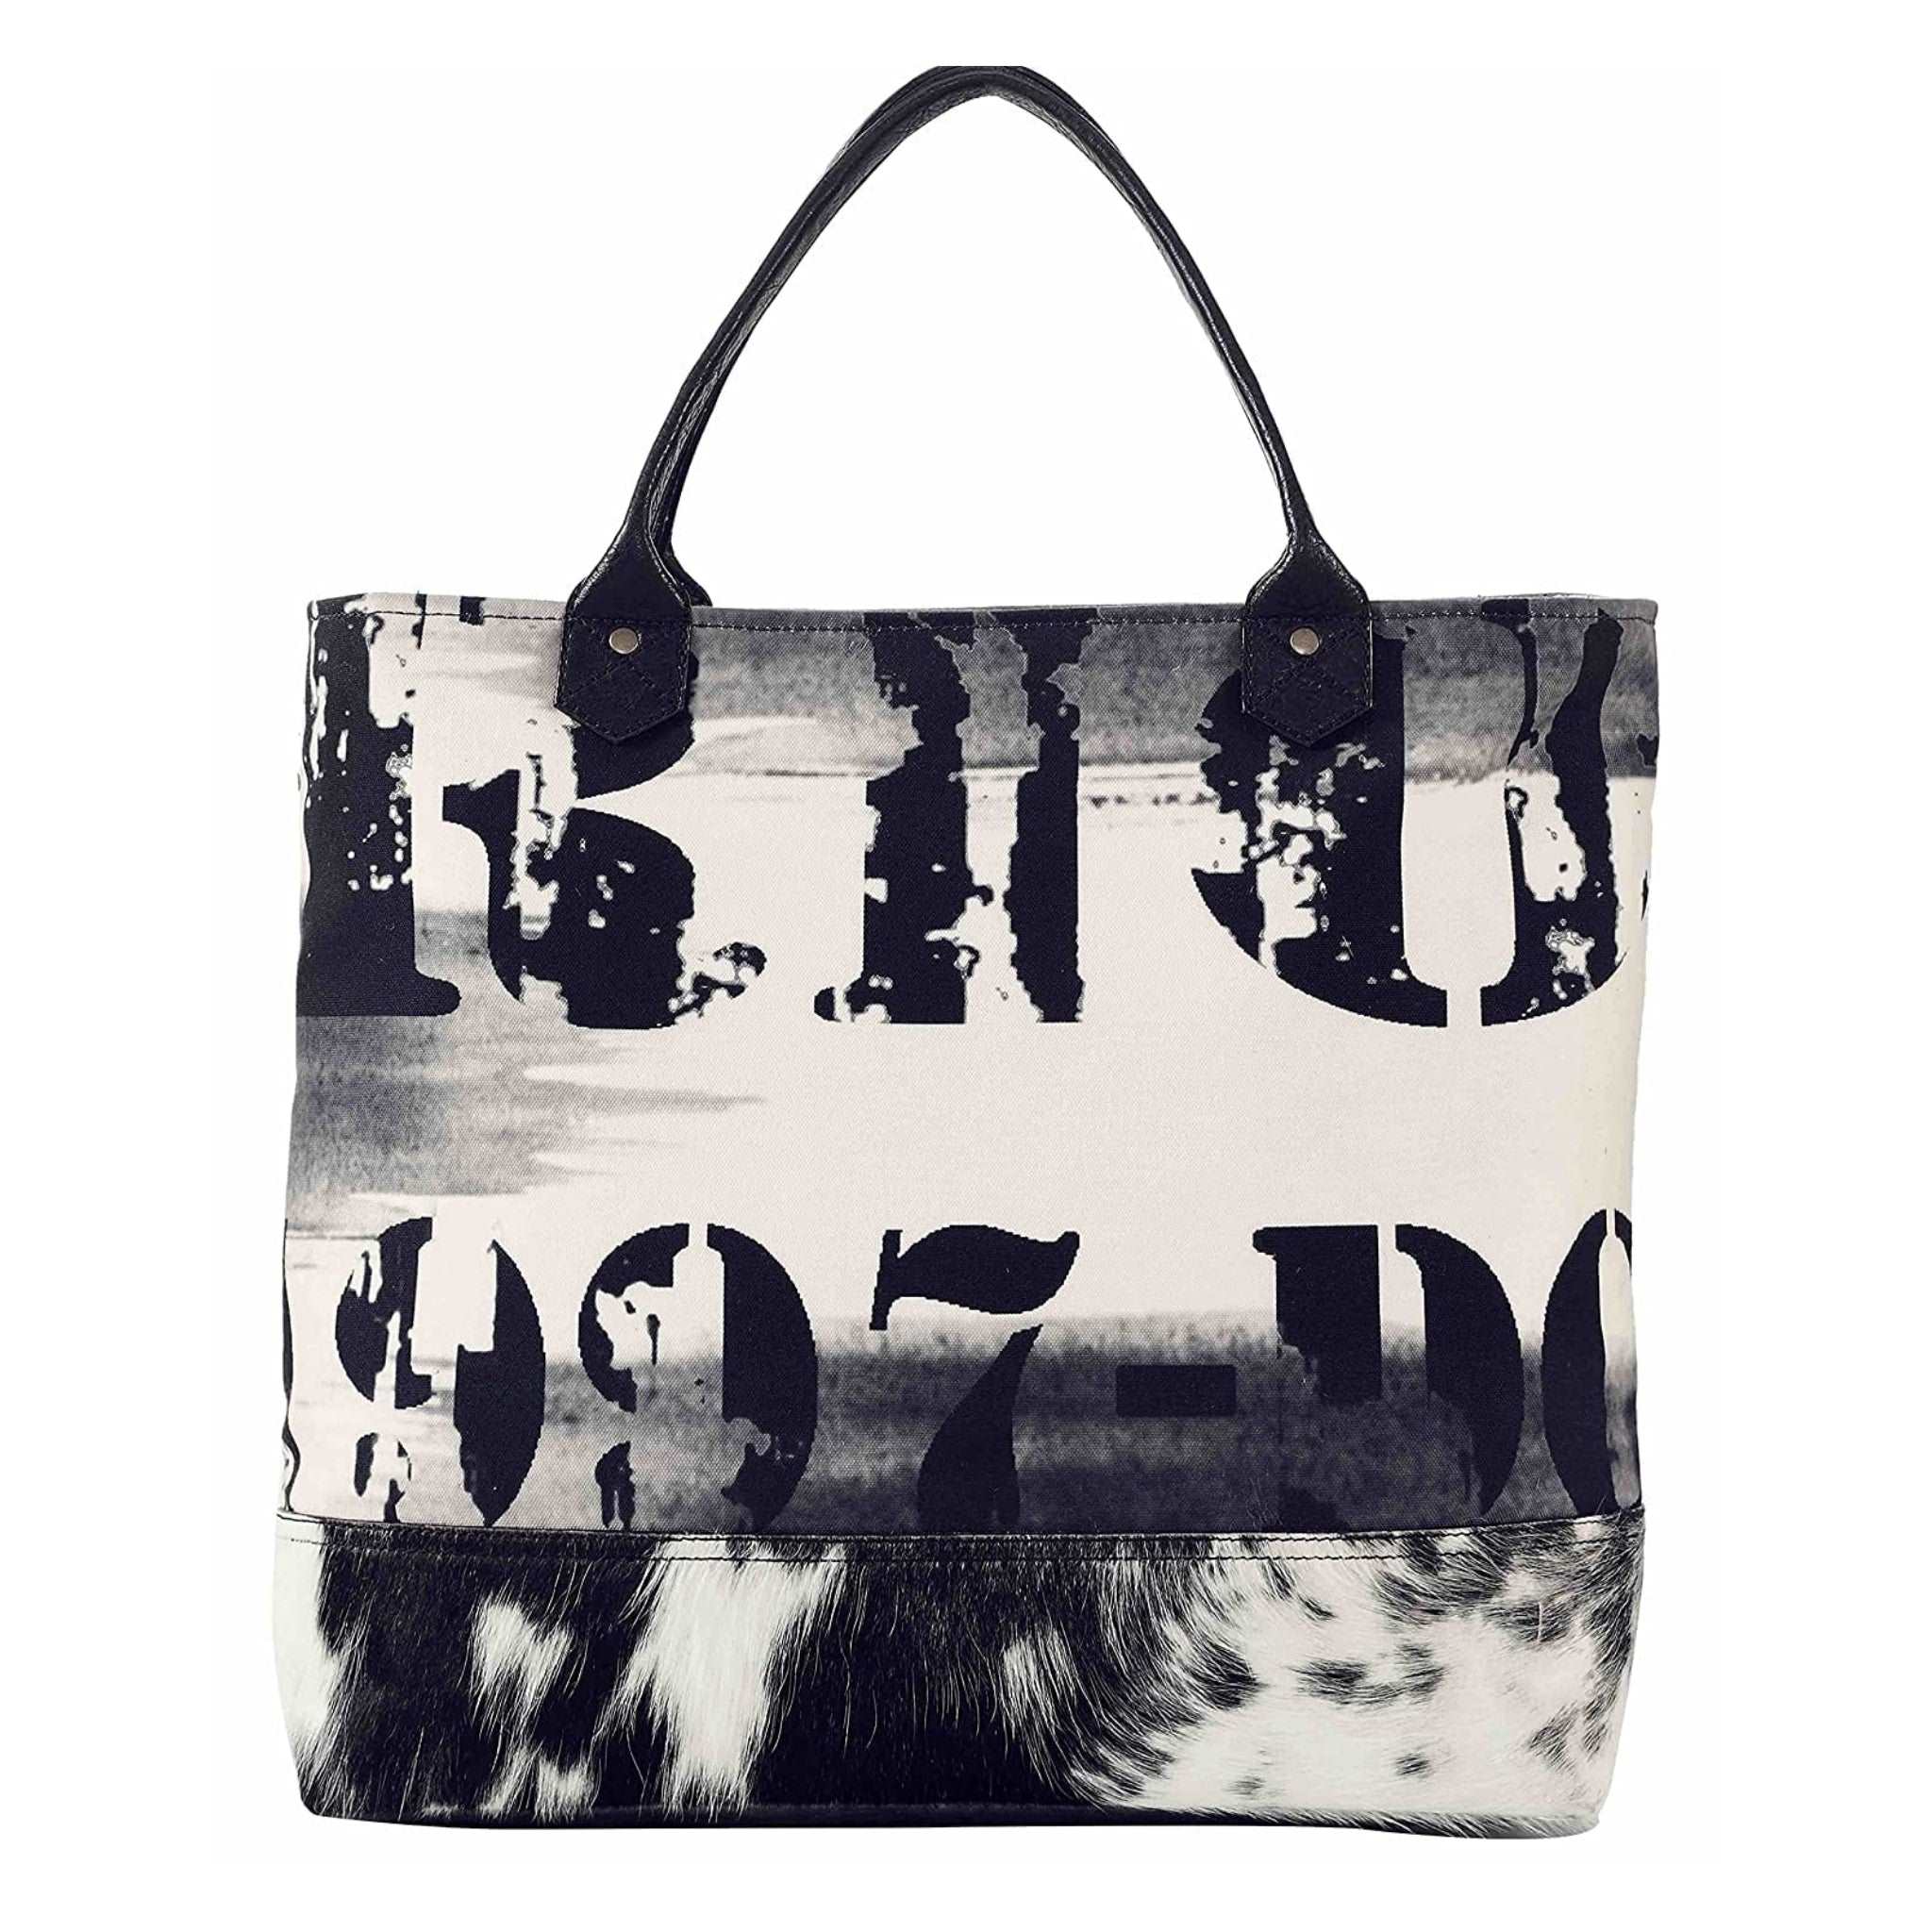 Mona B Beige Large Canvas Handbag for Women | Tote Bag for Grocery, Shopping, Travel | Stylish Vintage Shoulder Bags for Women